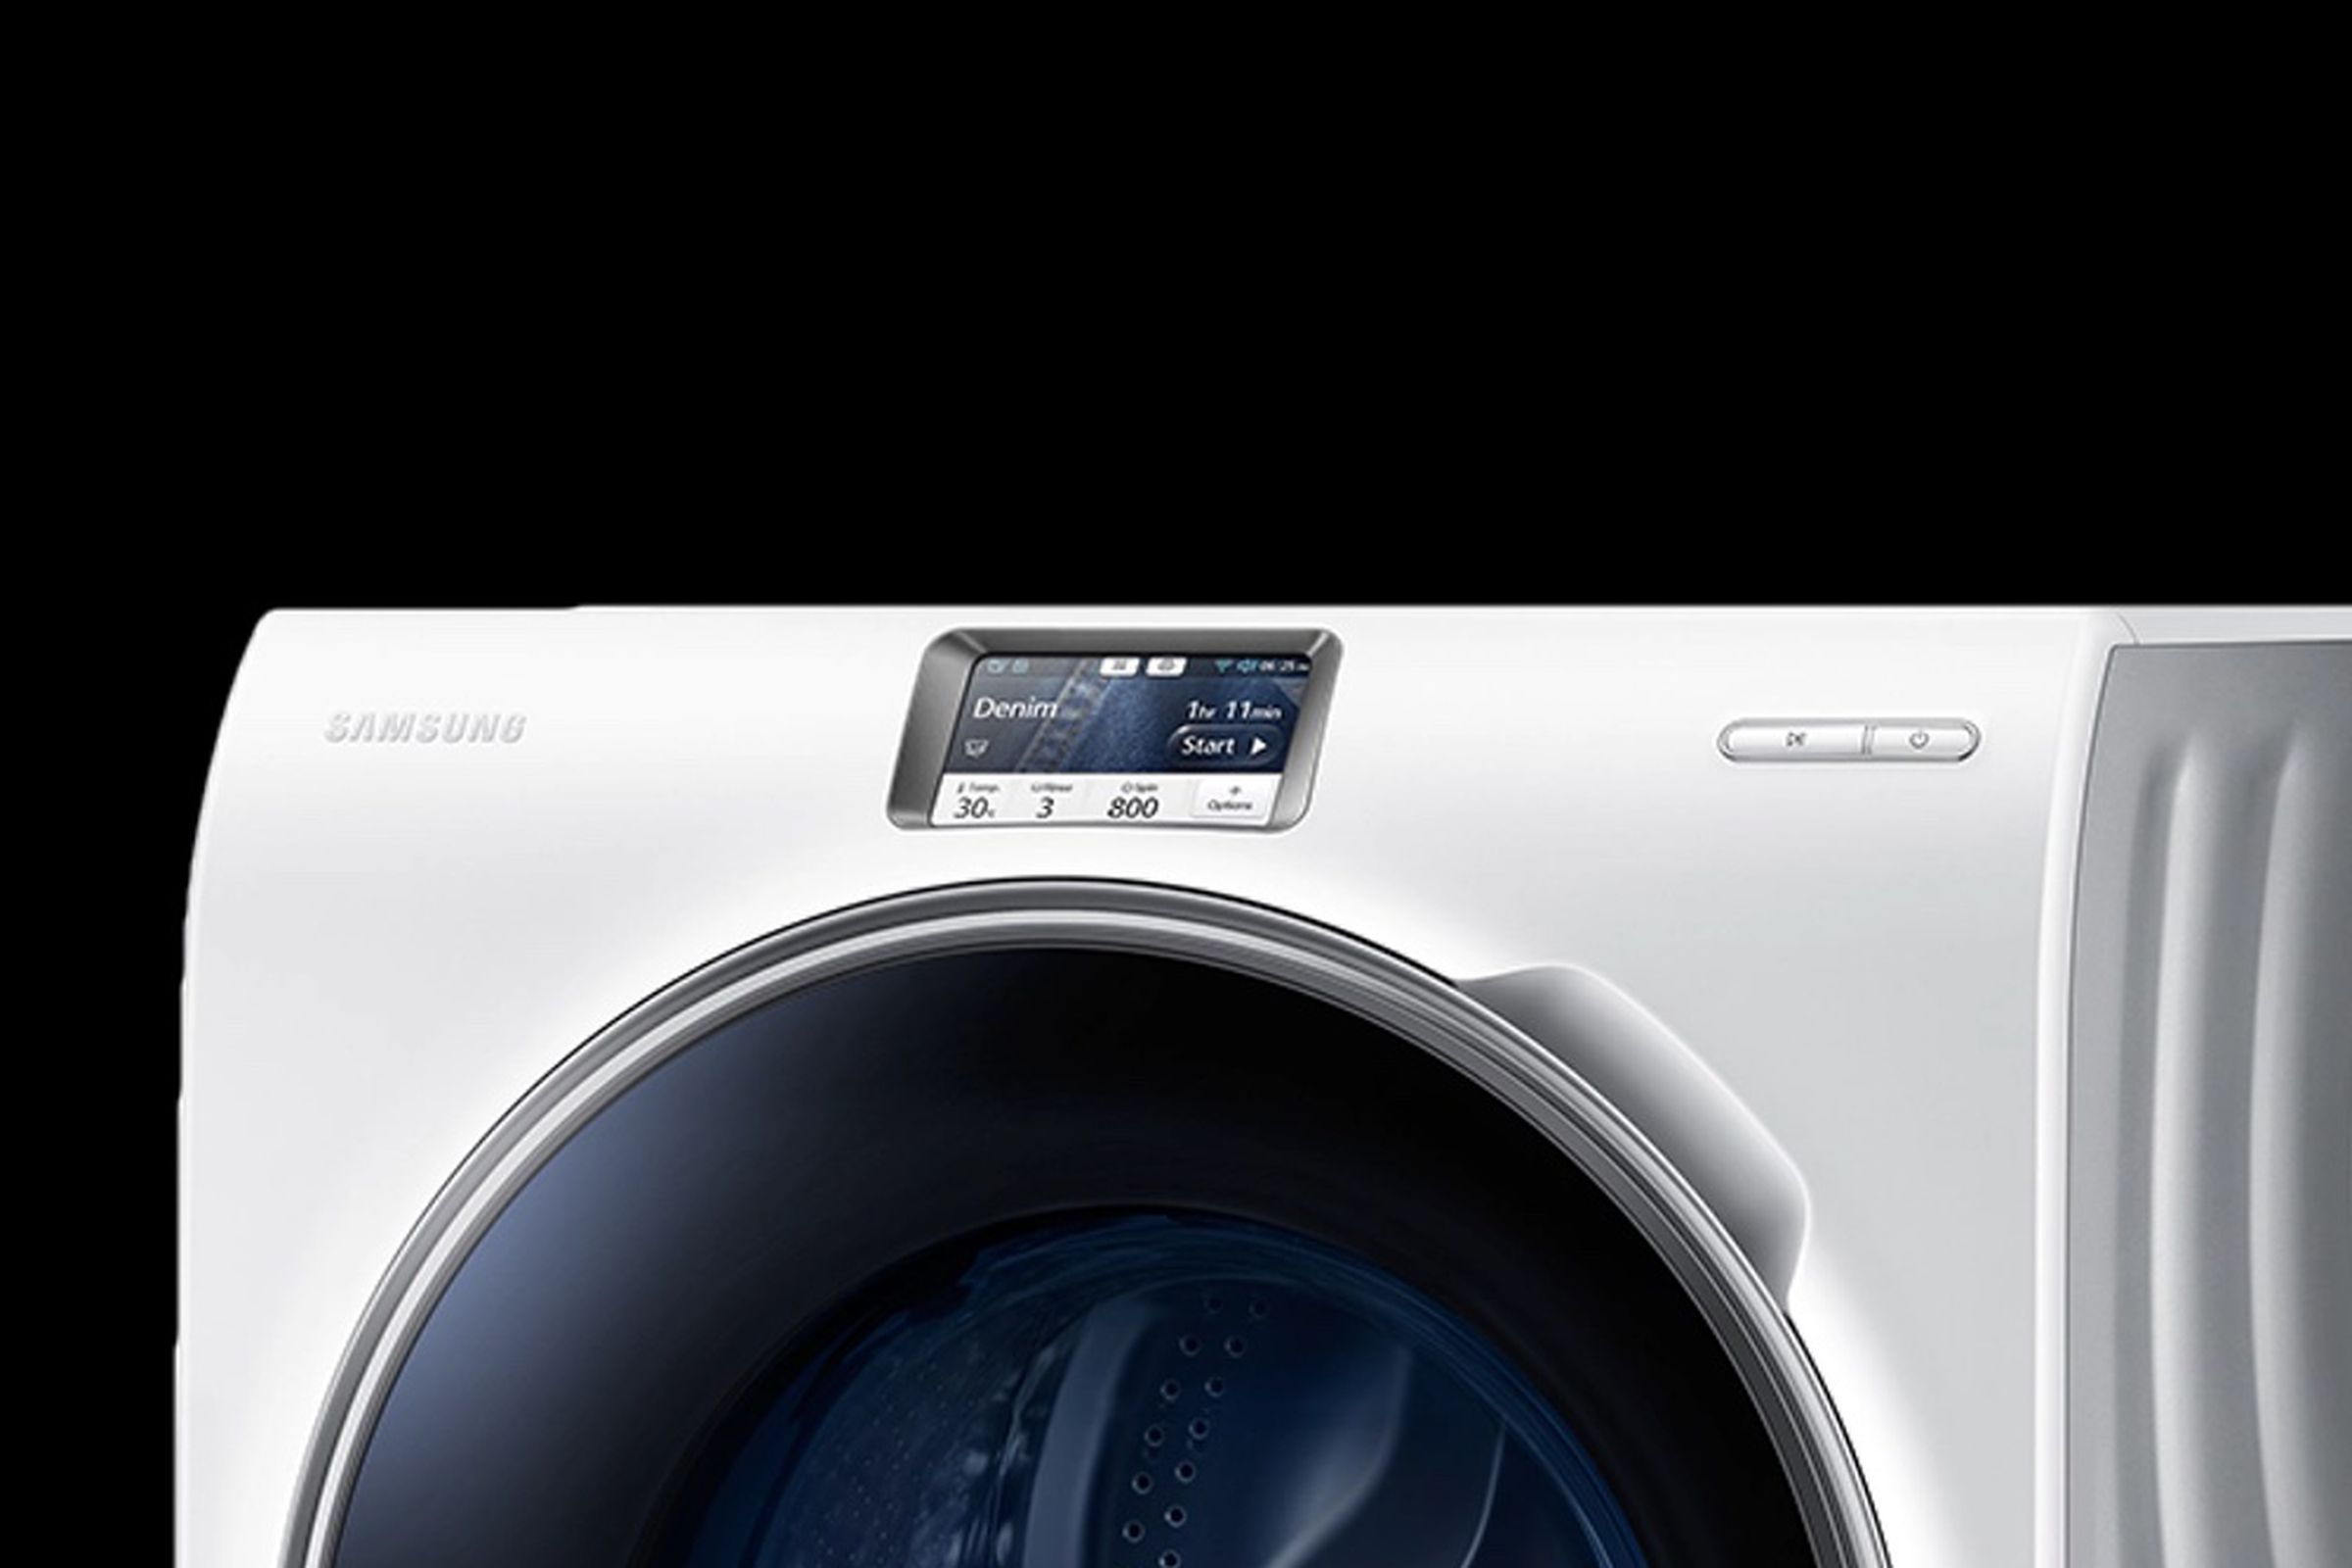 a washing machine with a touchscreen